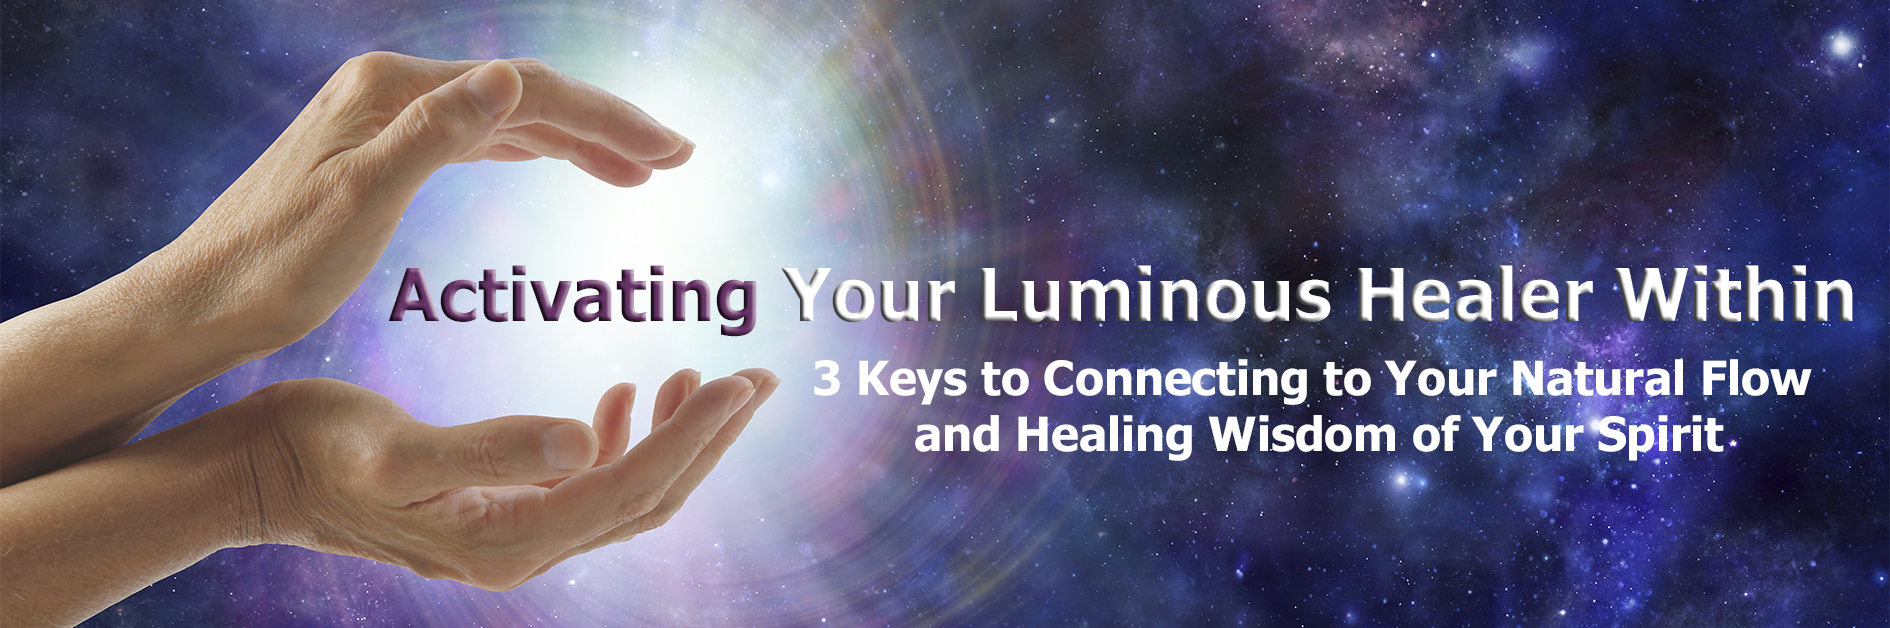 luminous healer activate energy